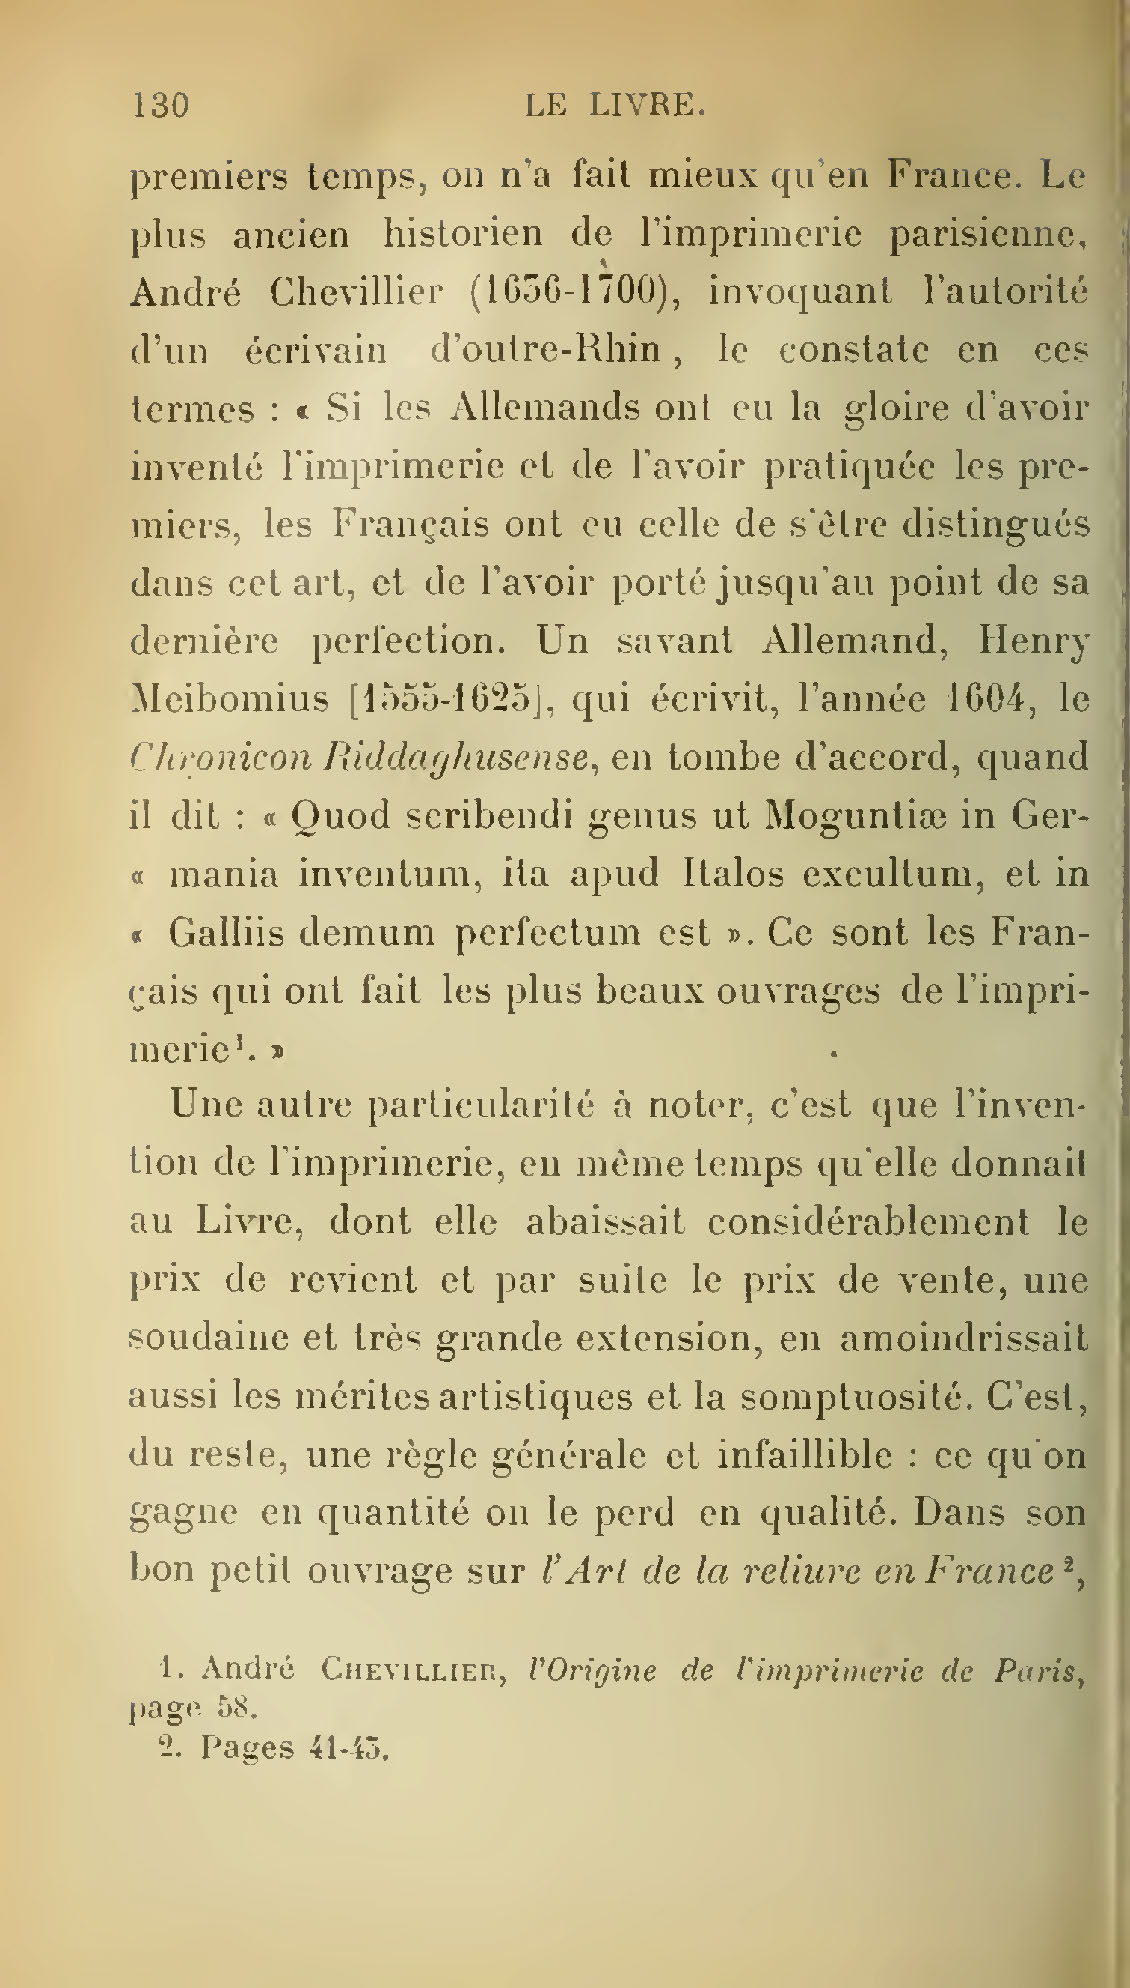 Albert Cim, Le Livre, t. III, p. 130.